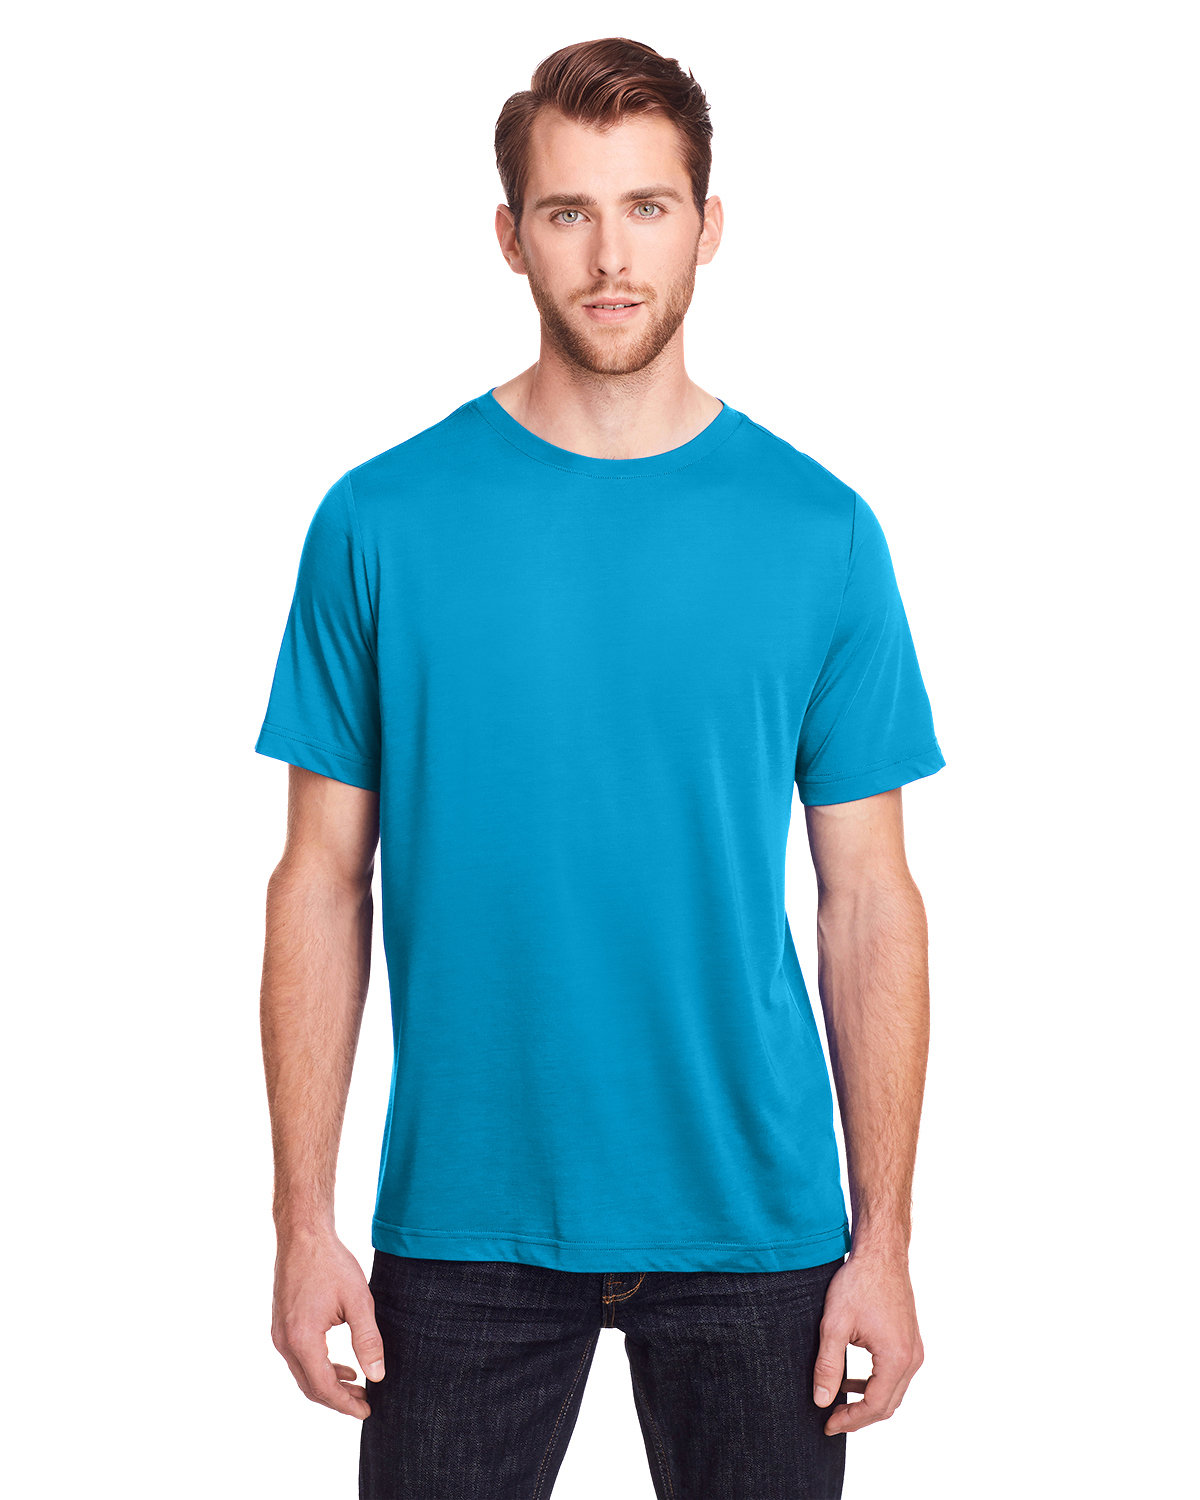 CORE365 Adult Fusion ChromaSoft Performance T-Shirt ELECTRIC BLUE 